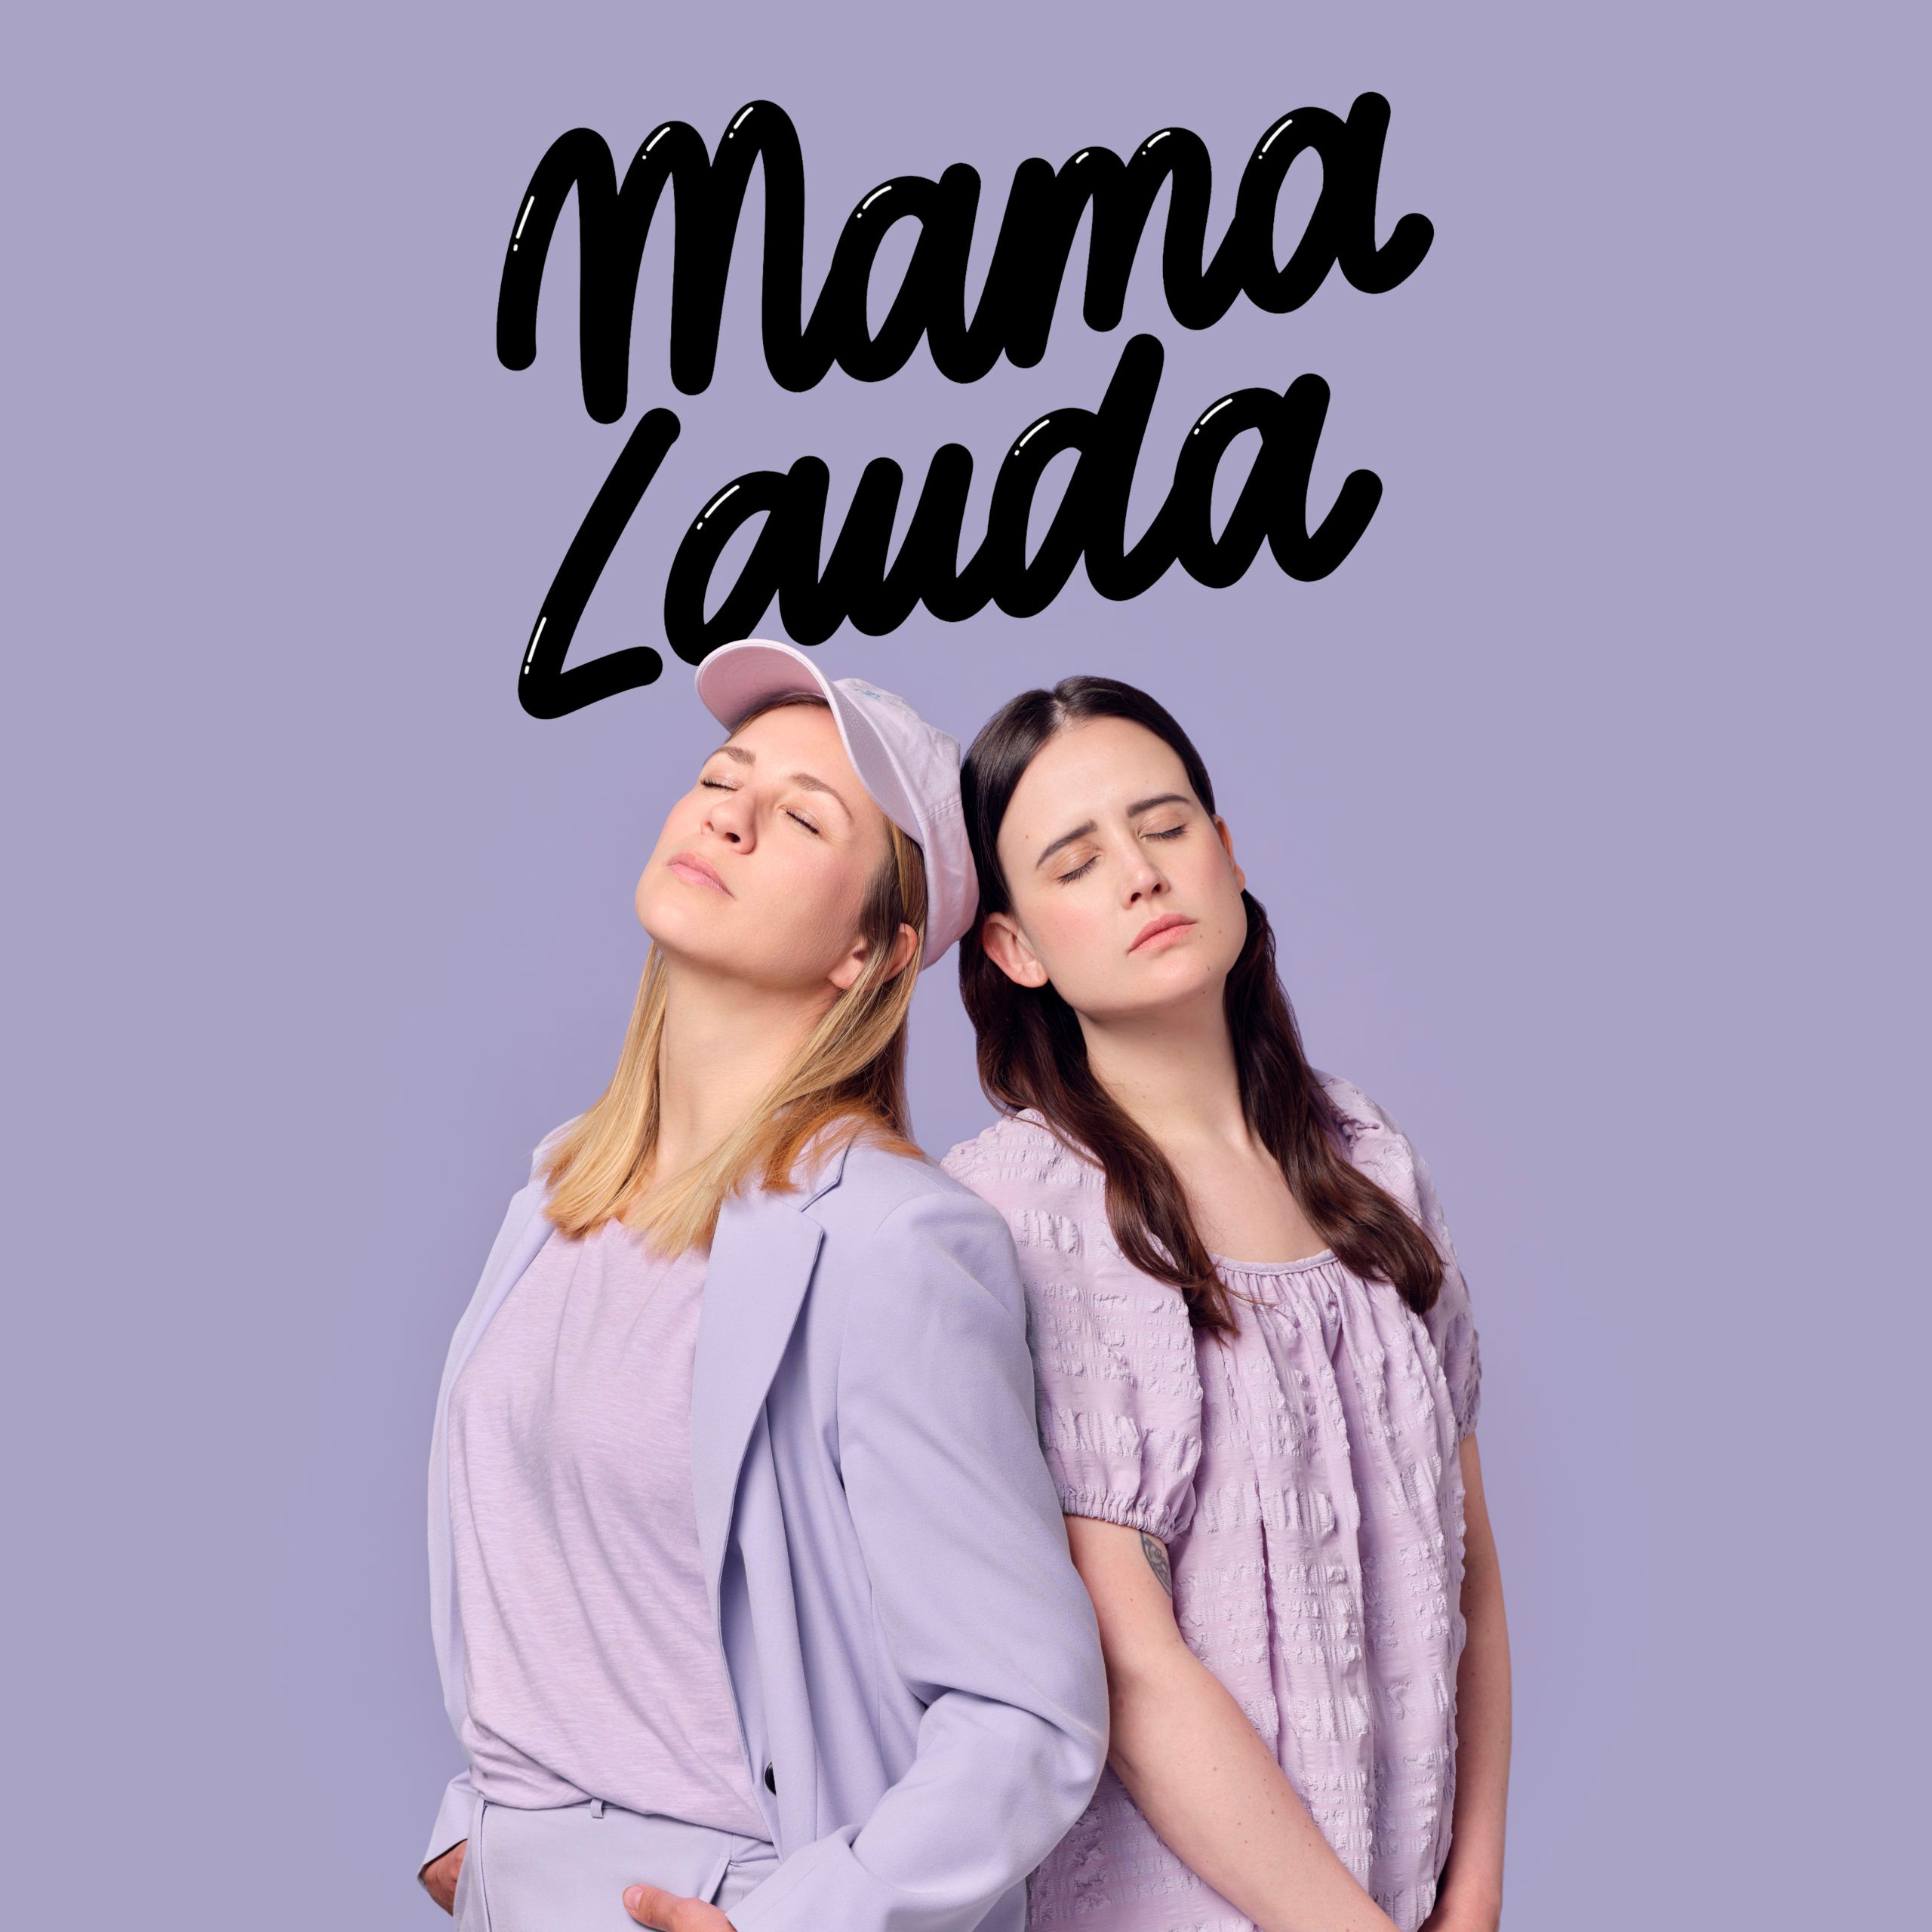 Lego Talk live in Berlin mit dem Familien-Podcast Mama Lauda